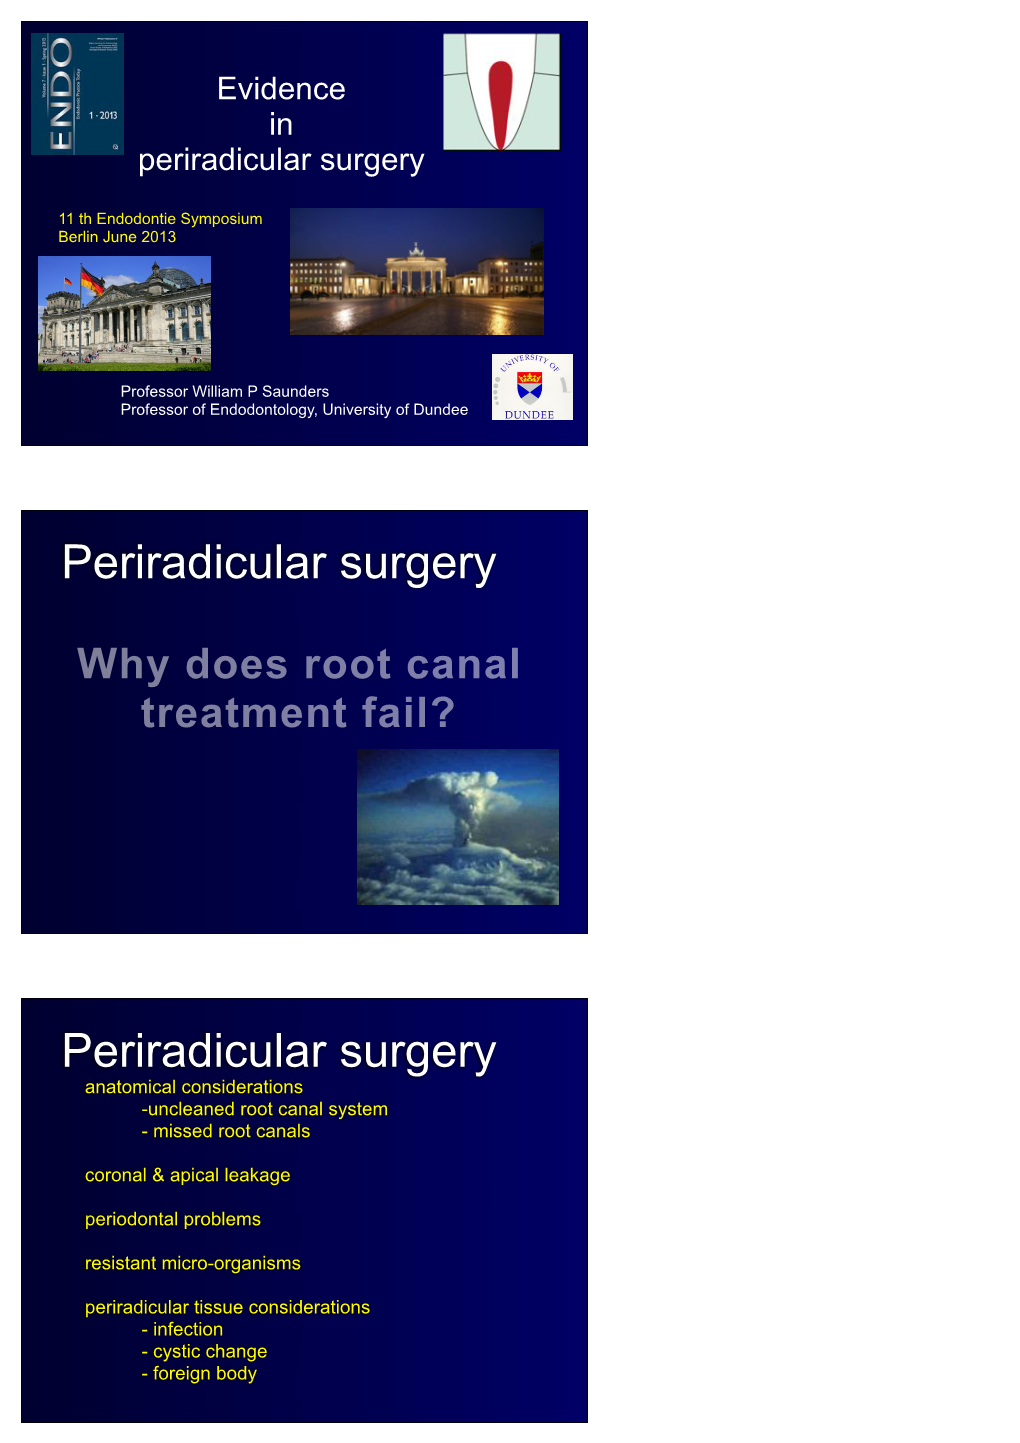 Evidence in Periradicular Surgery